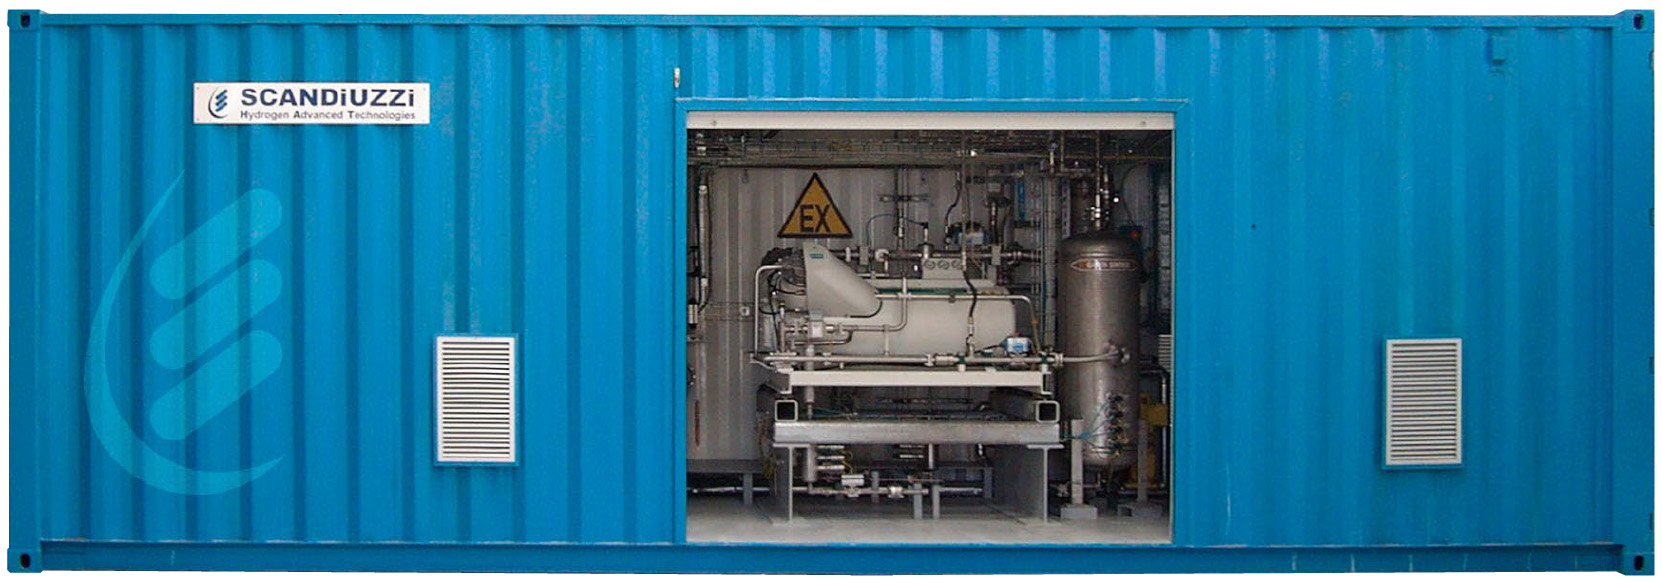 Scandiuzzi S.p.a. | The Hydrogen Generator